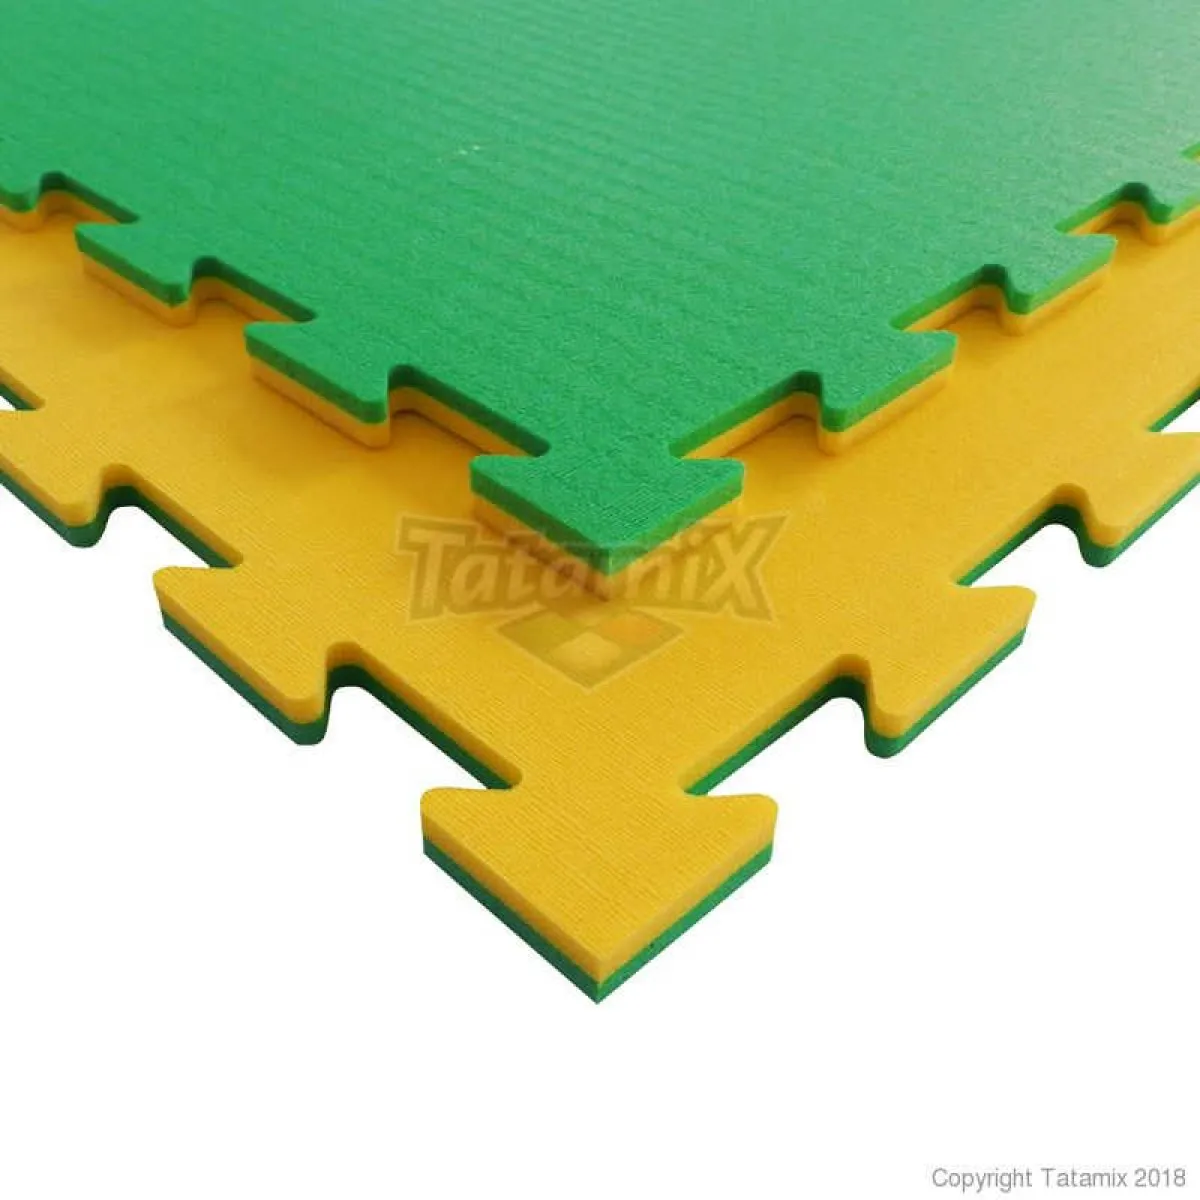 Esterilla para artes marciales Tatami School B14FR amarillo/verde 100 cm x 100 cm x 1,4 cm